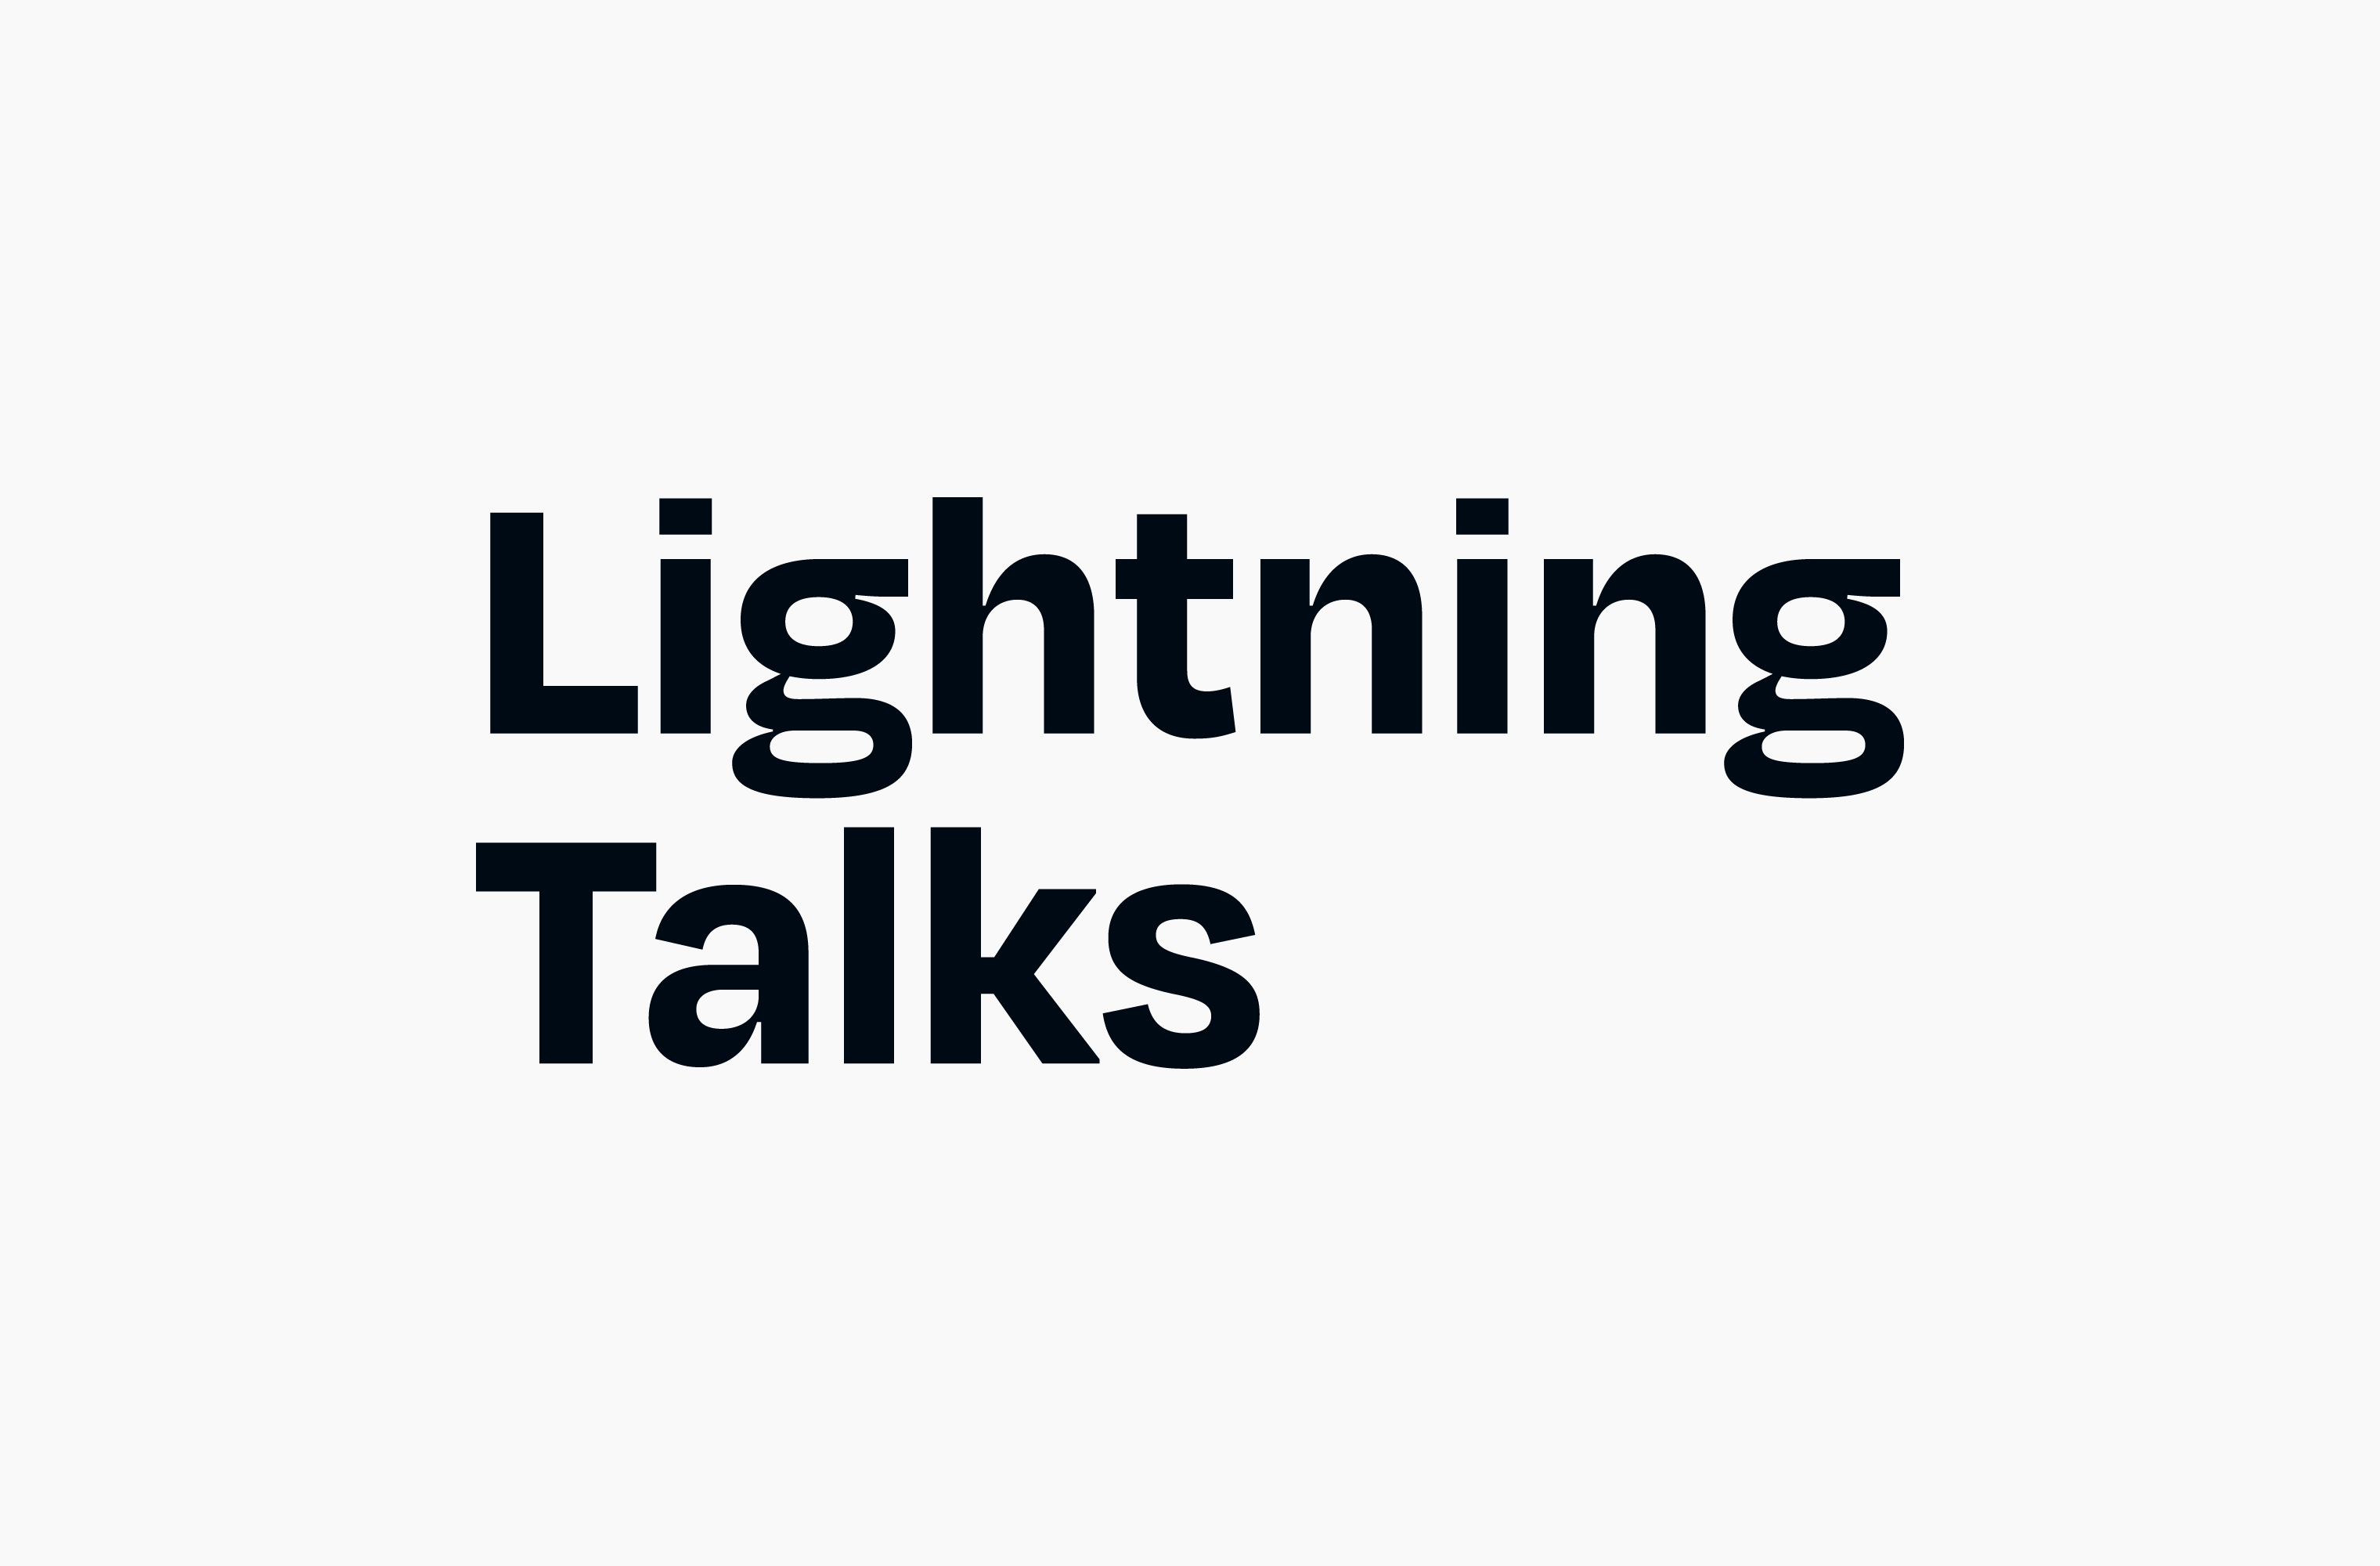 Black Lightning Talks wordmark on a white background